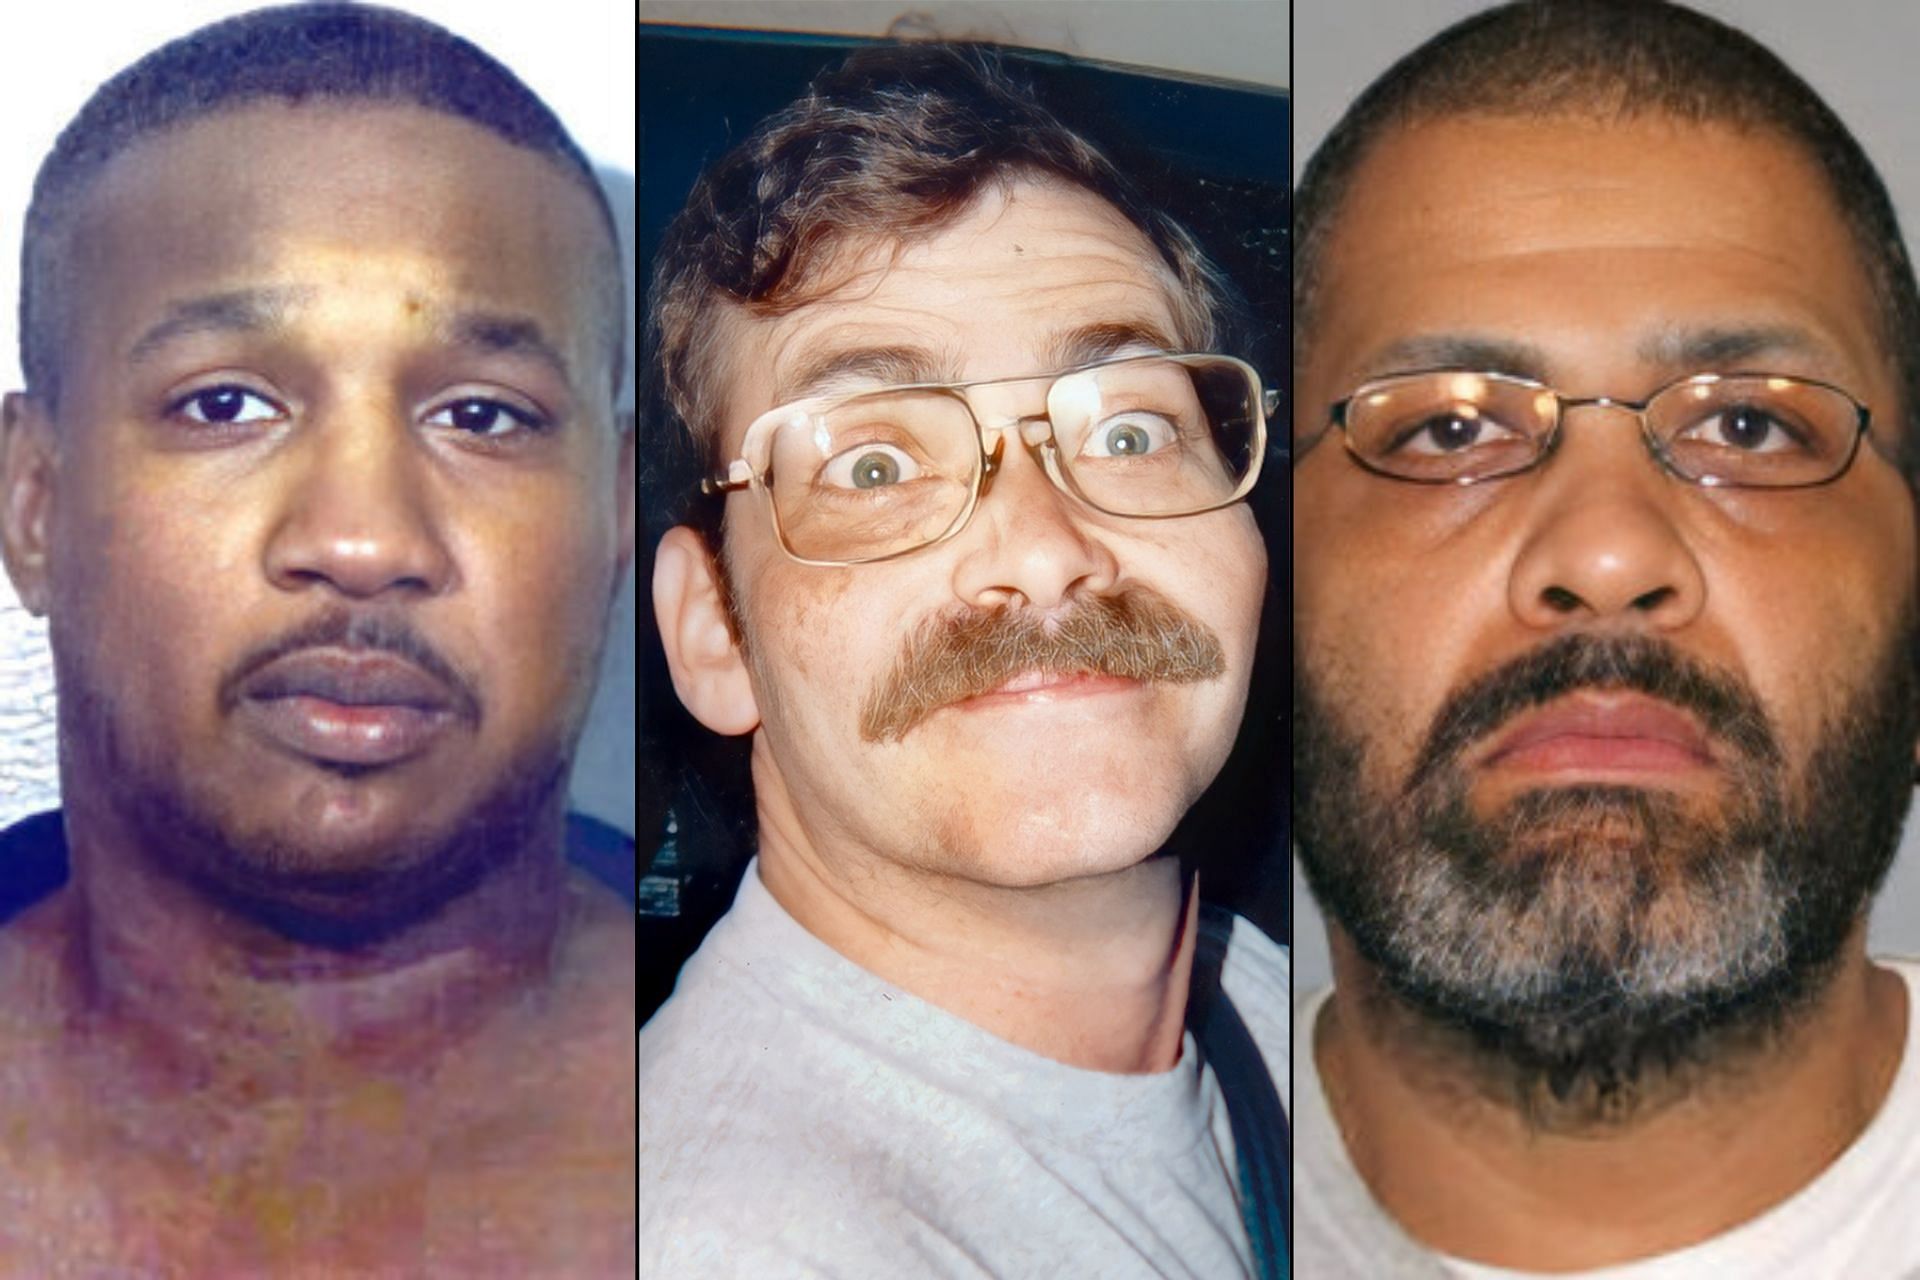 Serial Killer Capital: Baton Rouge - Who were the 3 killers?